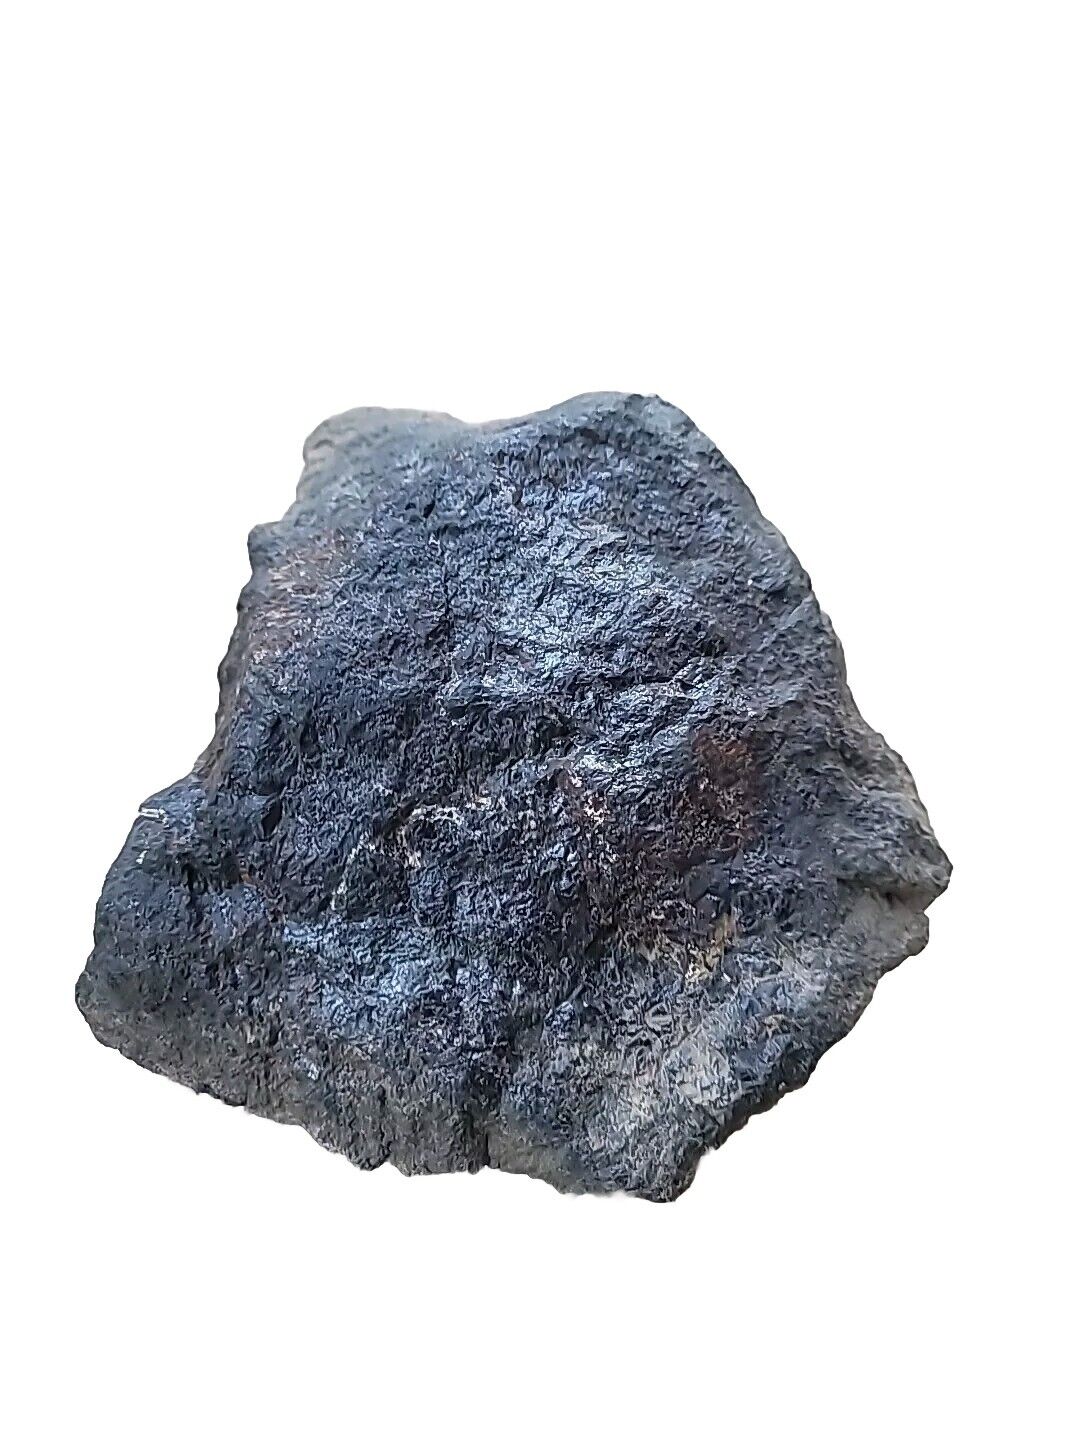 Large Dark Iron Ore, Magnetite, Utah Iron Mountain Iron Ore Rock 14+ Lbs